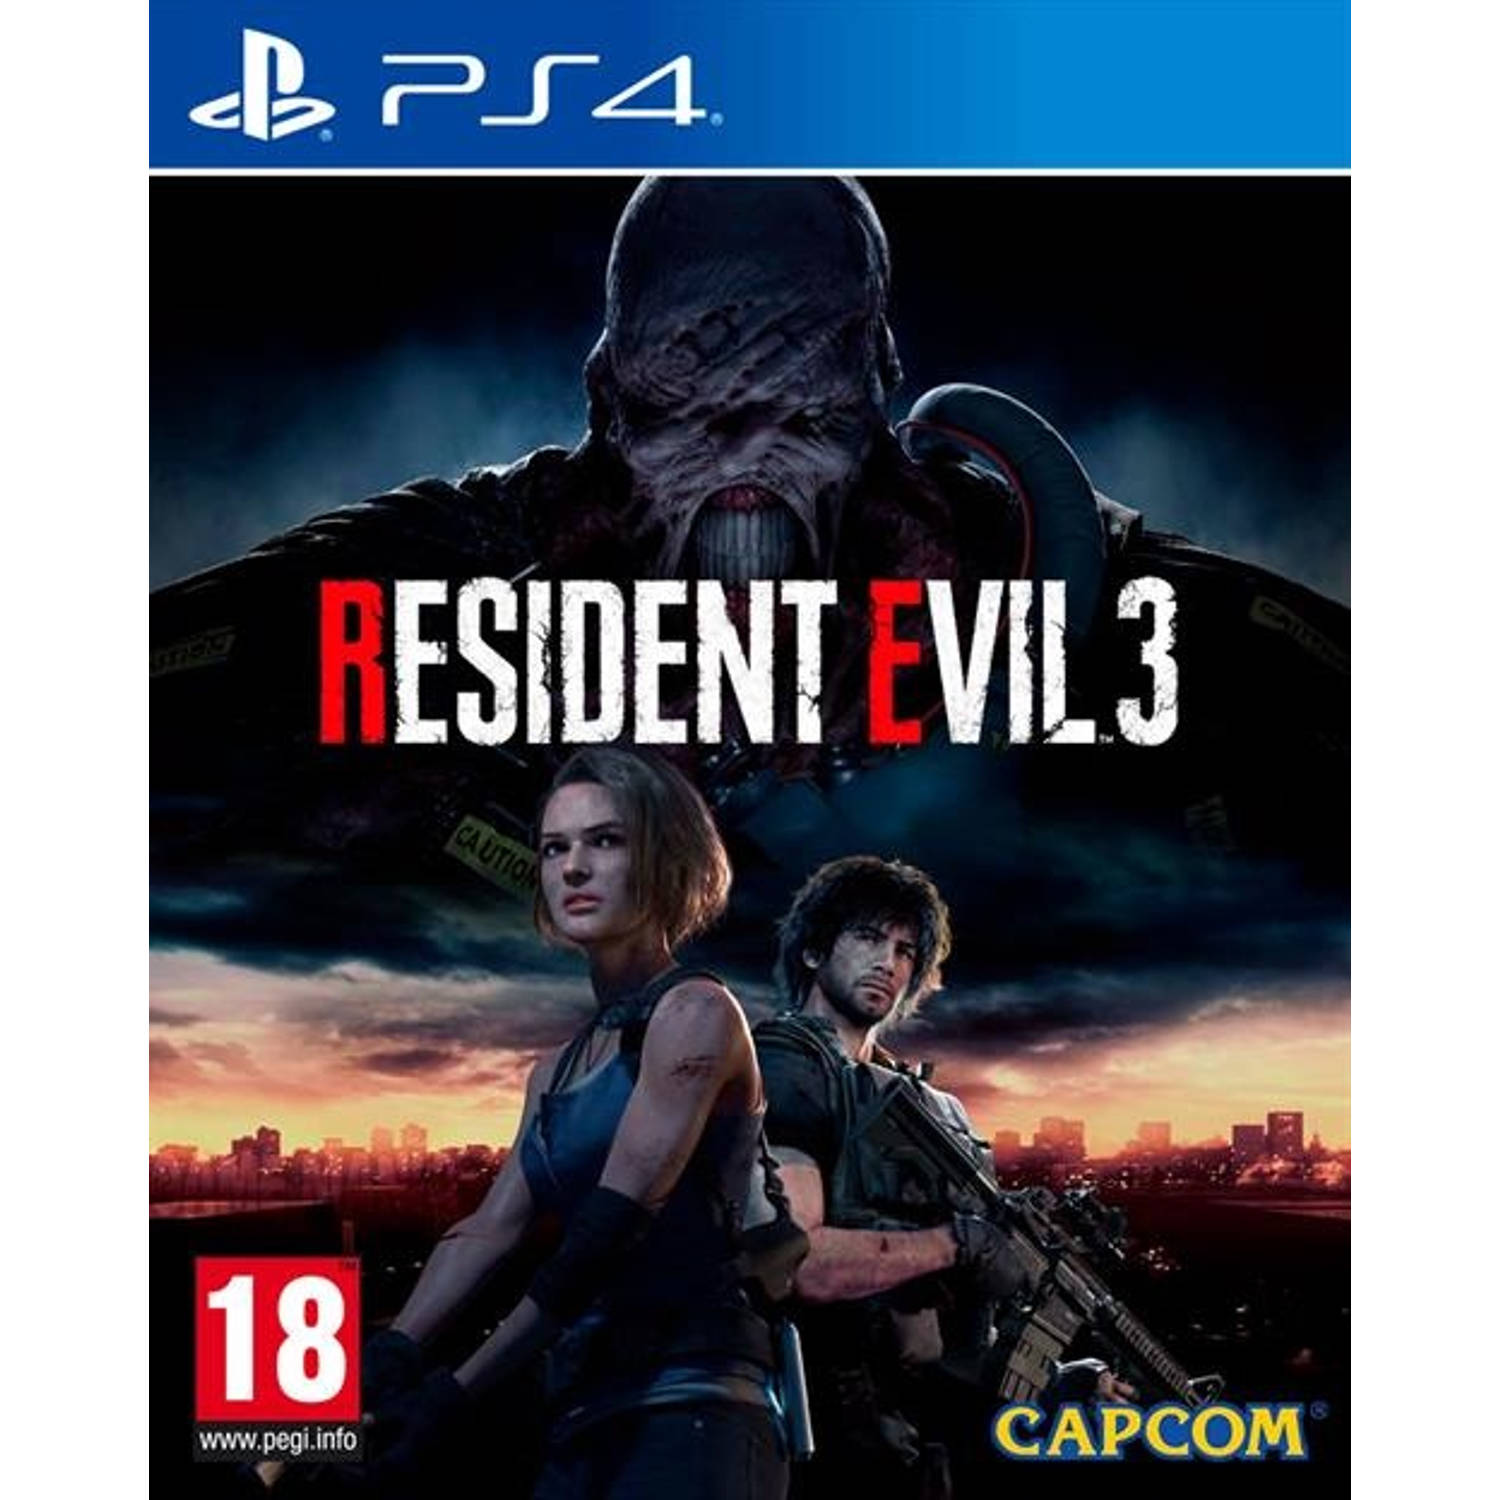 Resident evil 3, (Playstation 4). PS4